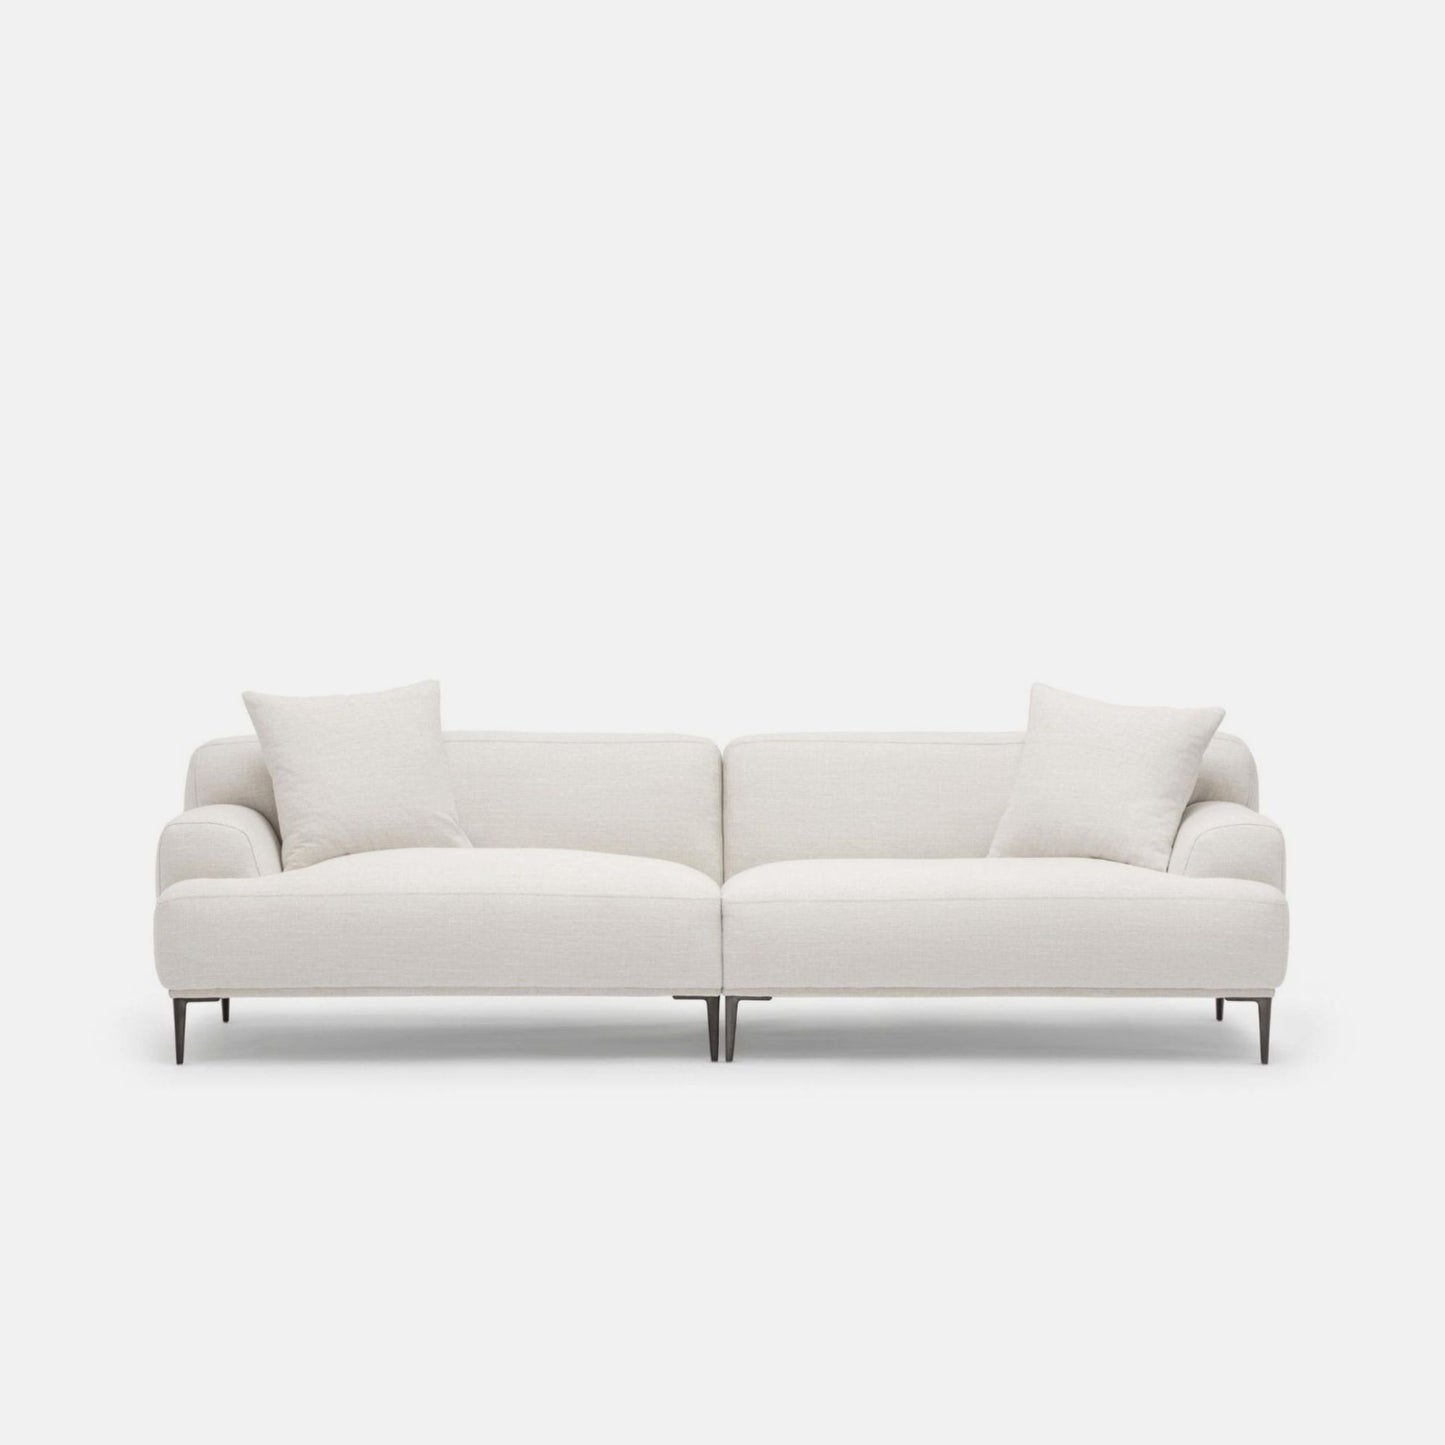 Crystal white polyester blend sofa